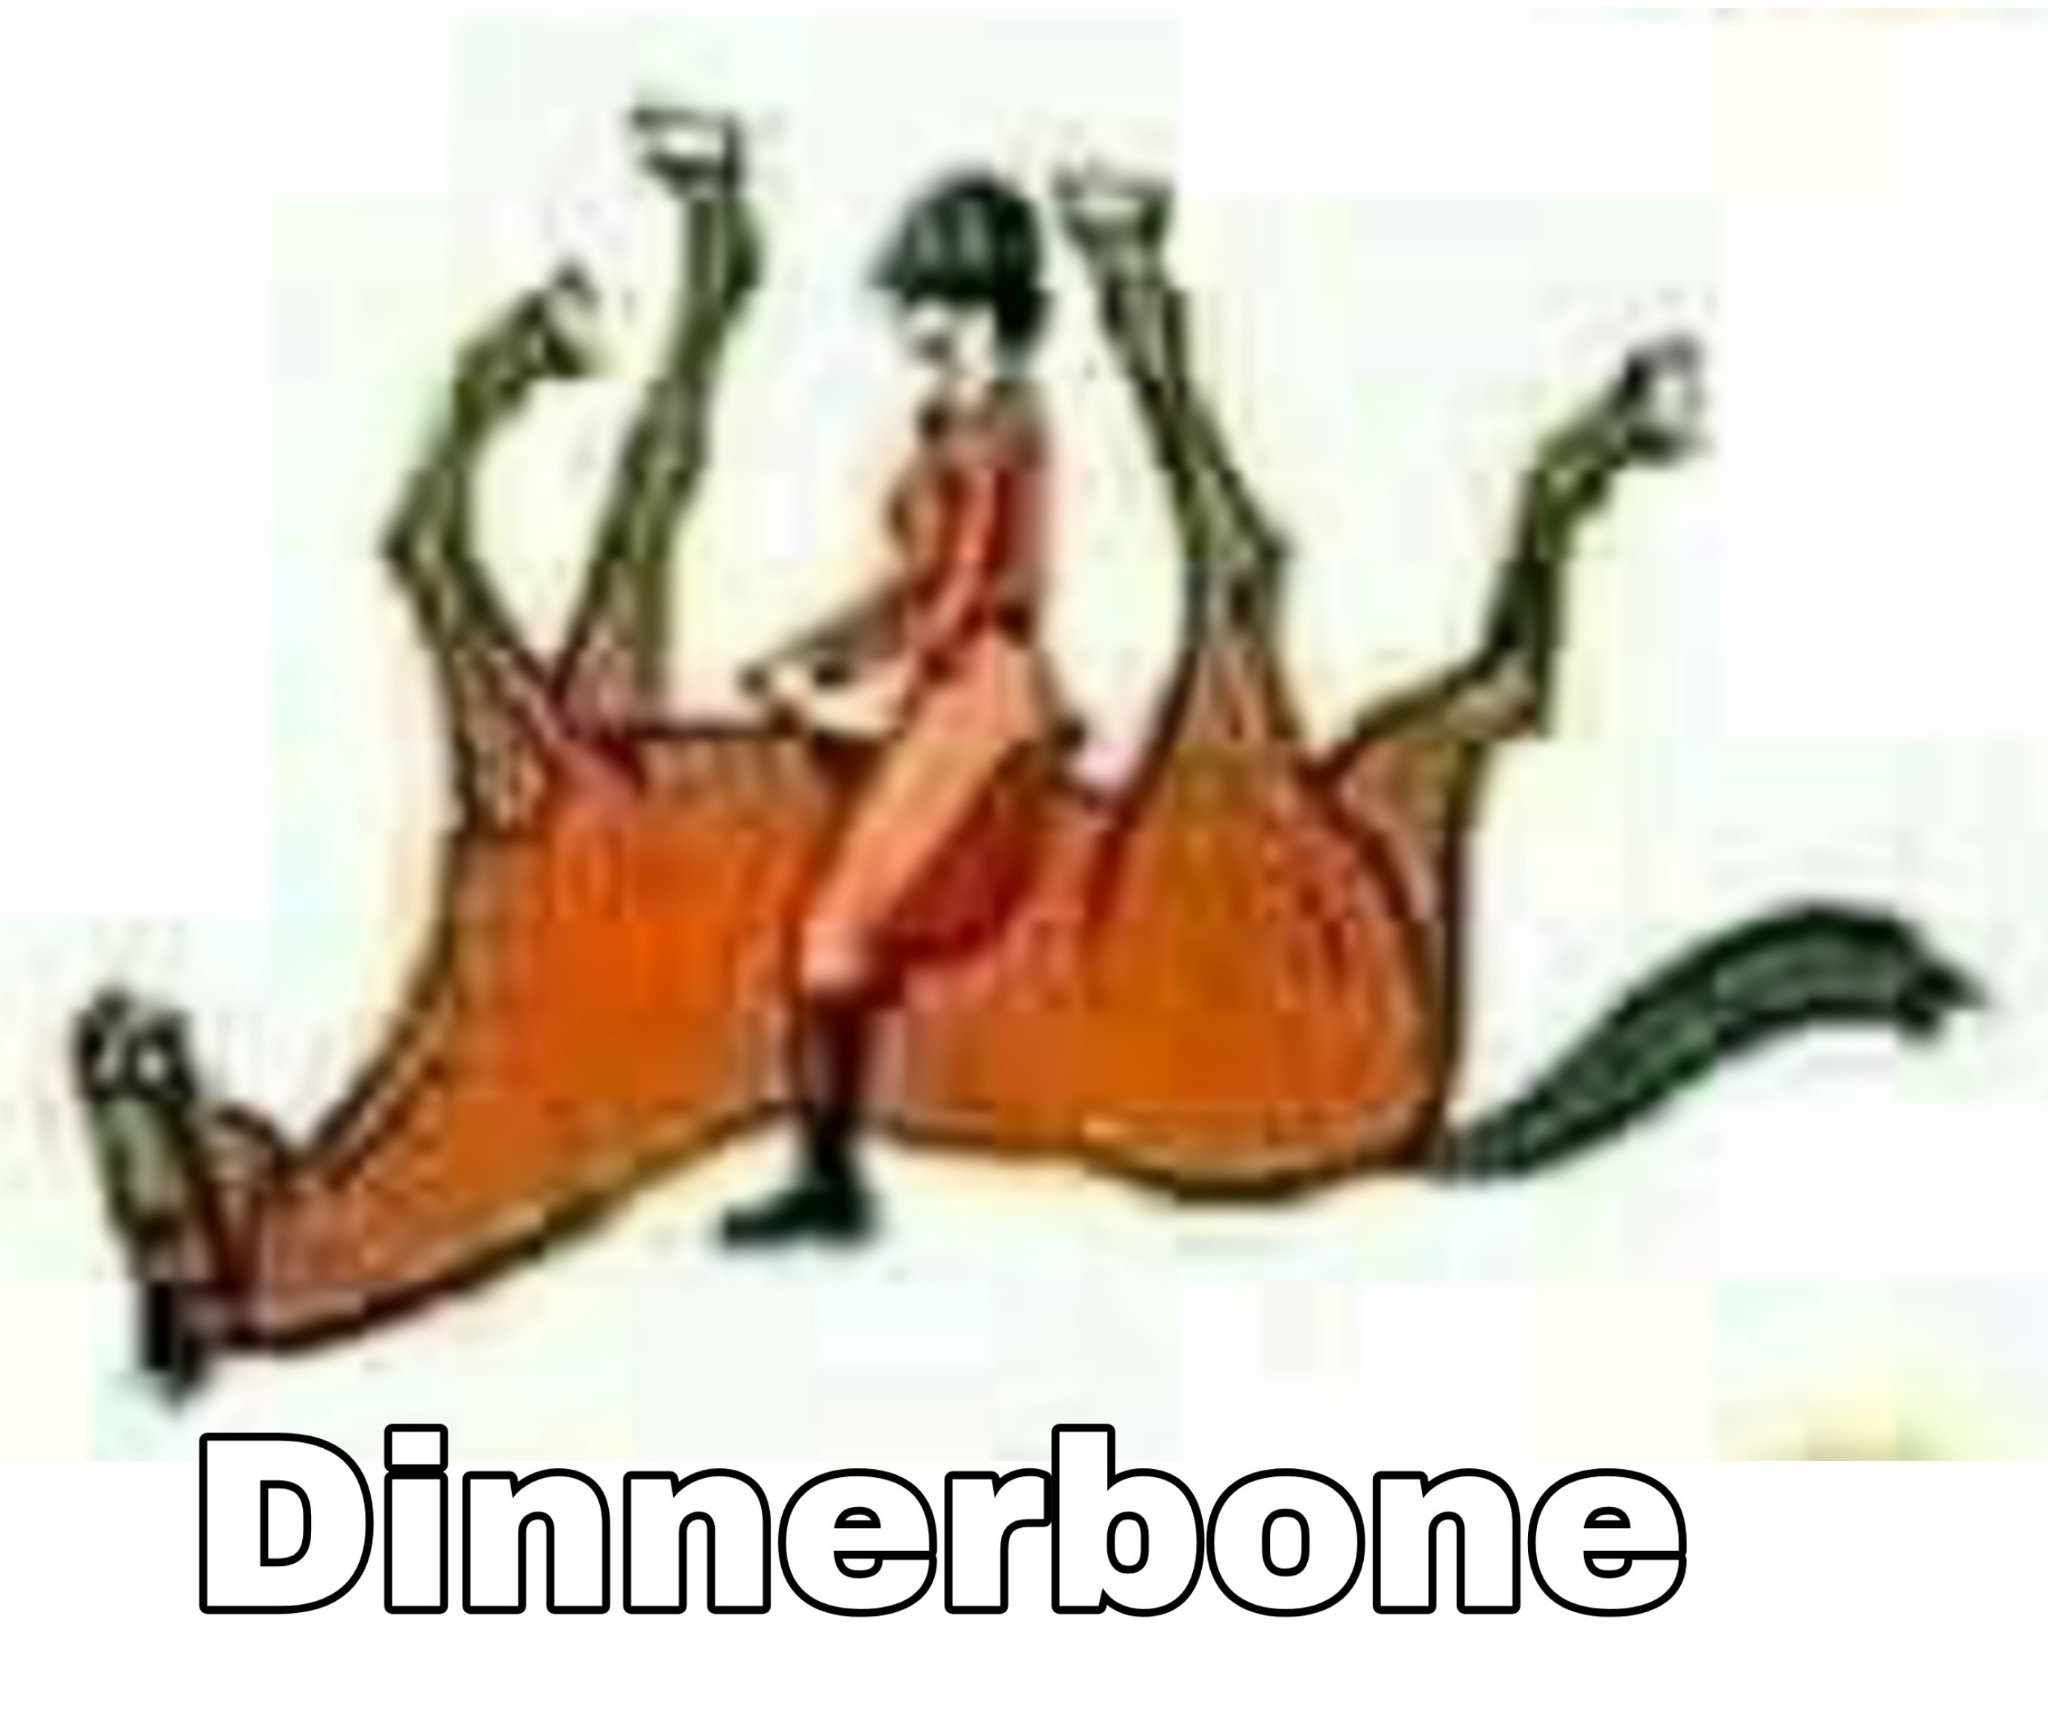 DinnerBone - meme